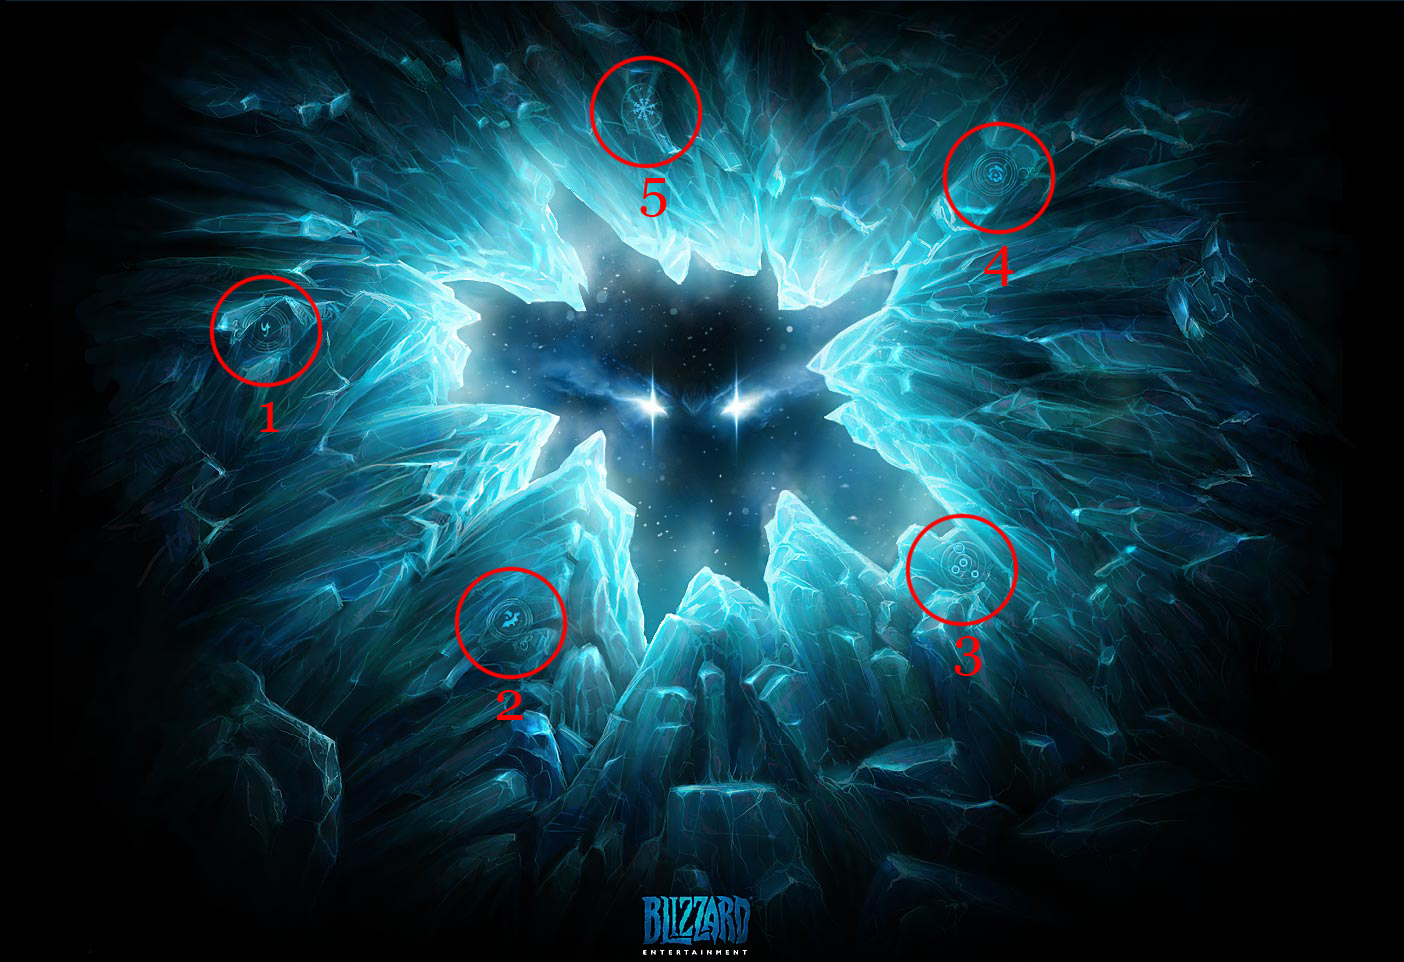 Blizzard teaser oldal - spekuláljunk!